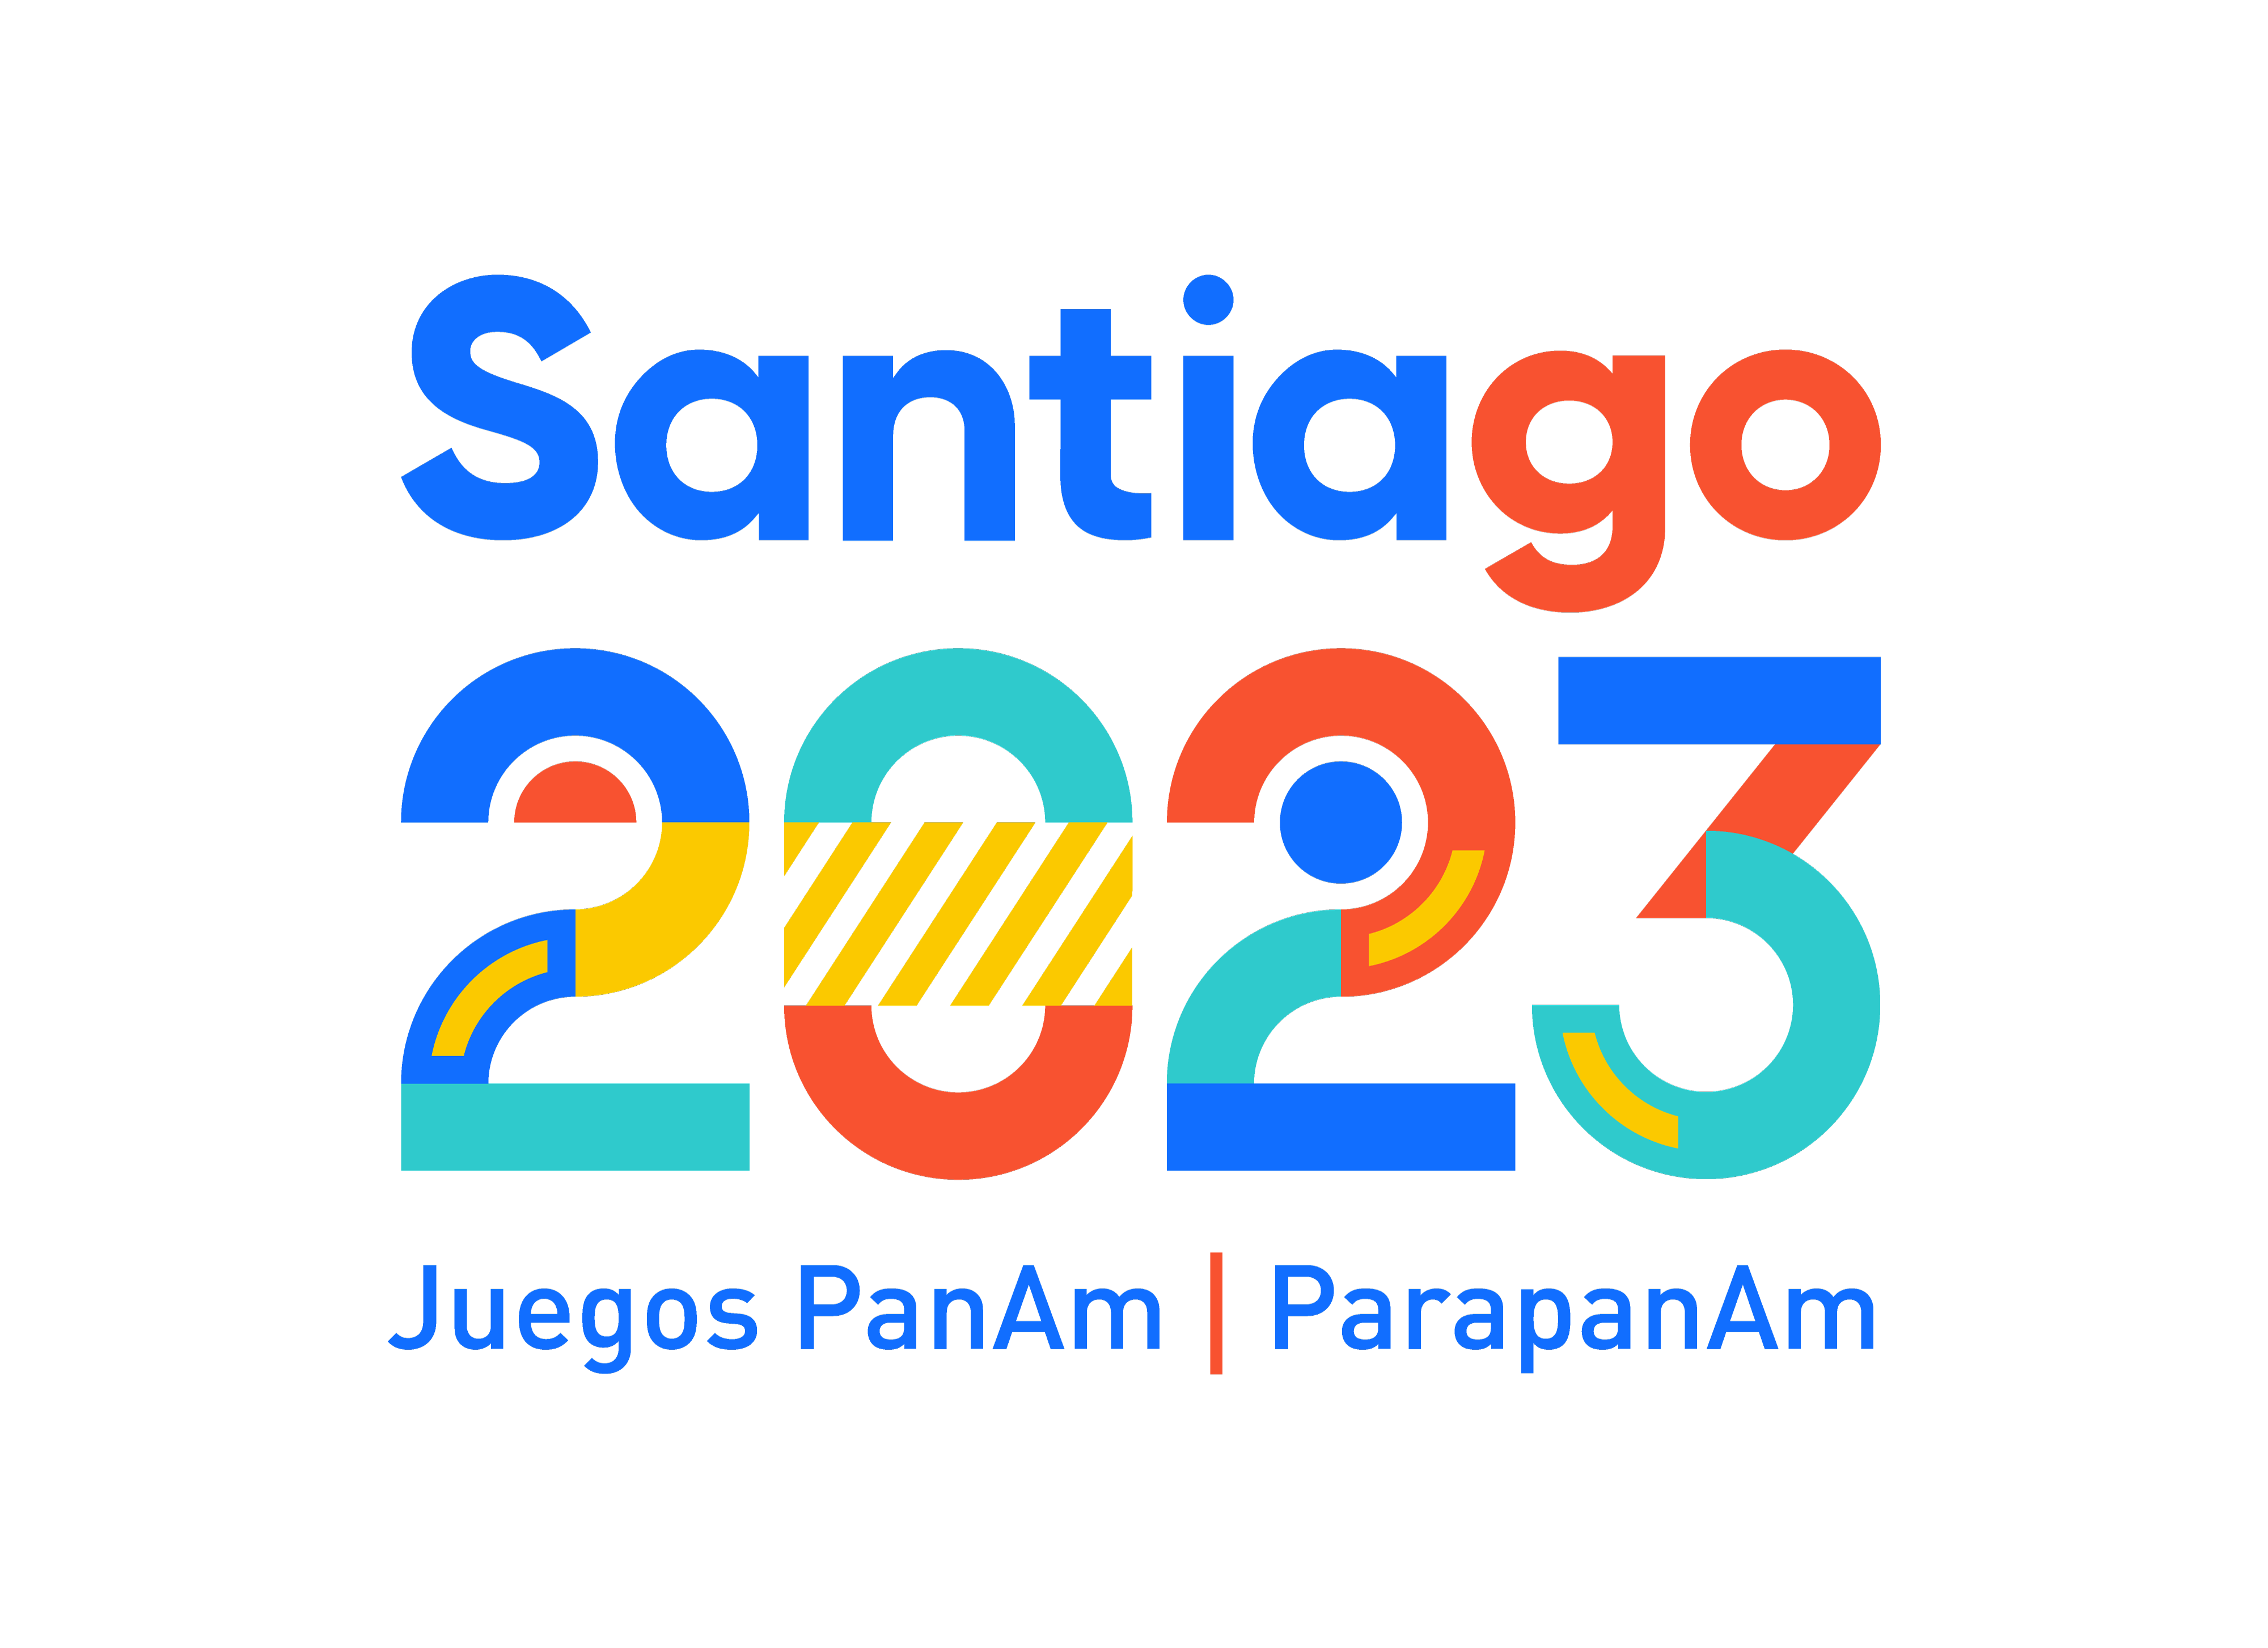 Brasil comemora desempenho no Pan de Santiago – Web Vôlei